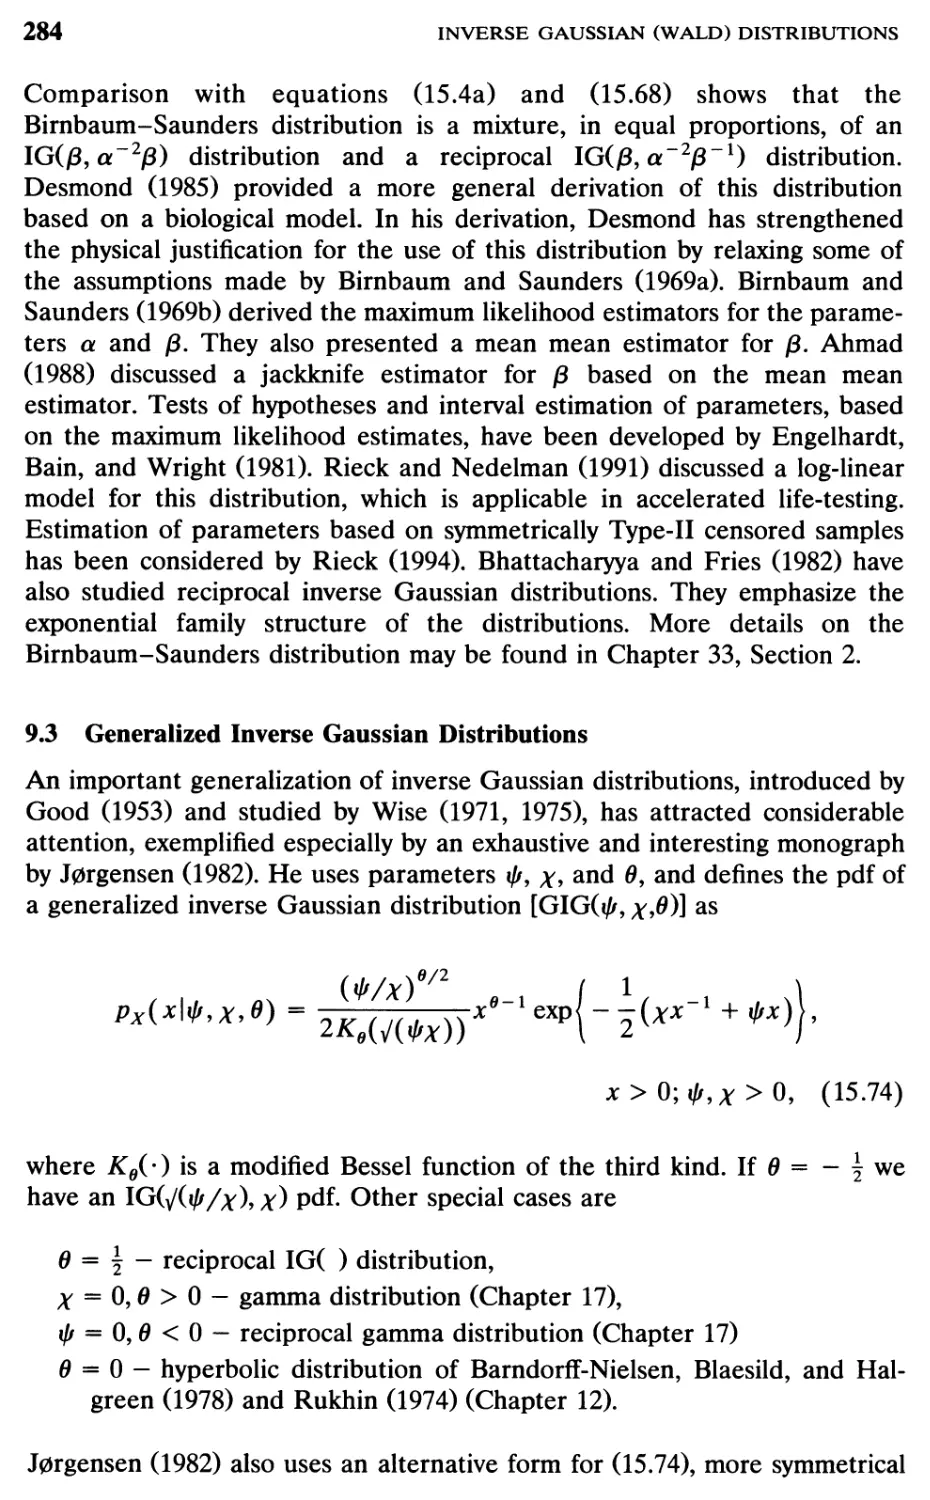 9.3 Generalized Inverse Gaussian Distributions, 284